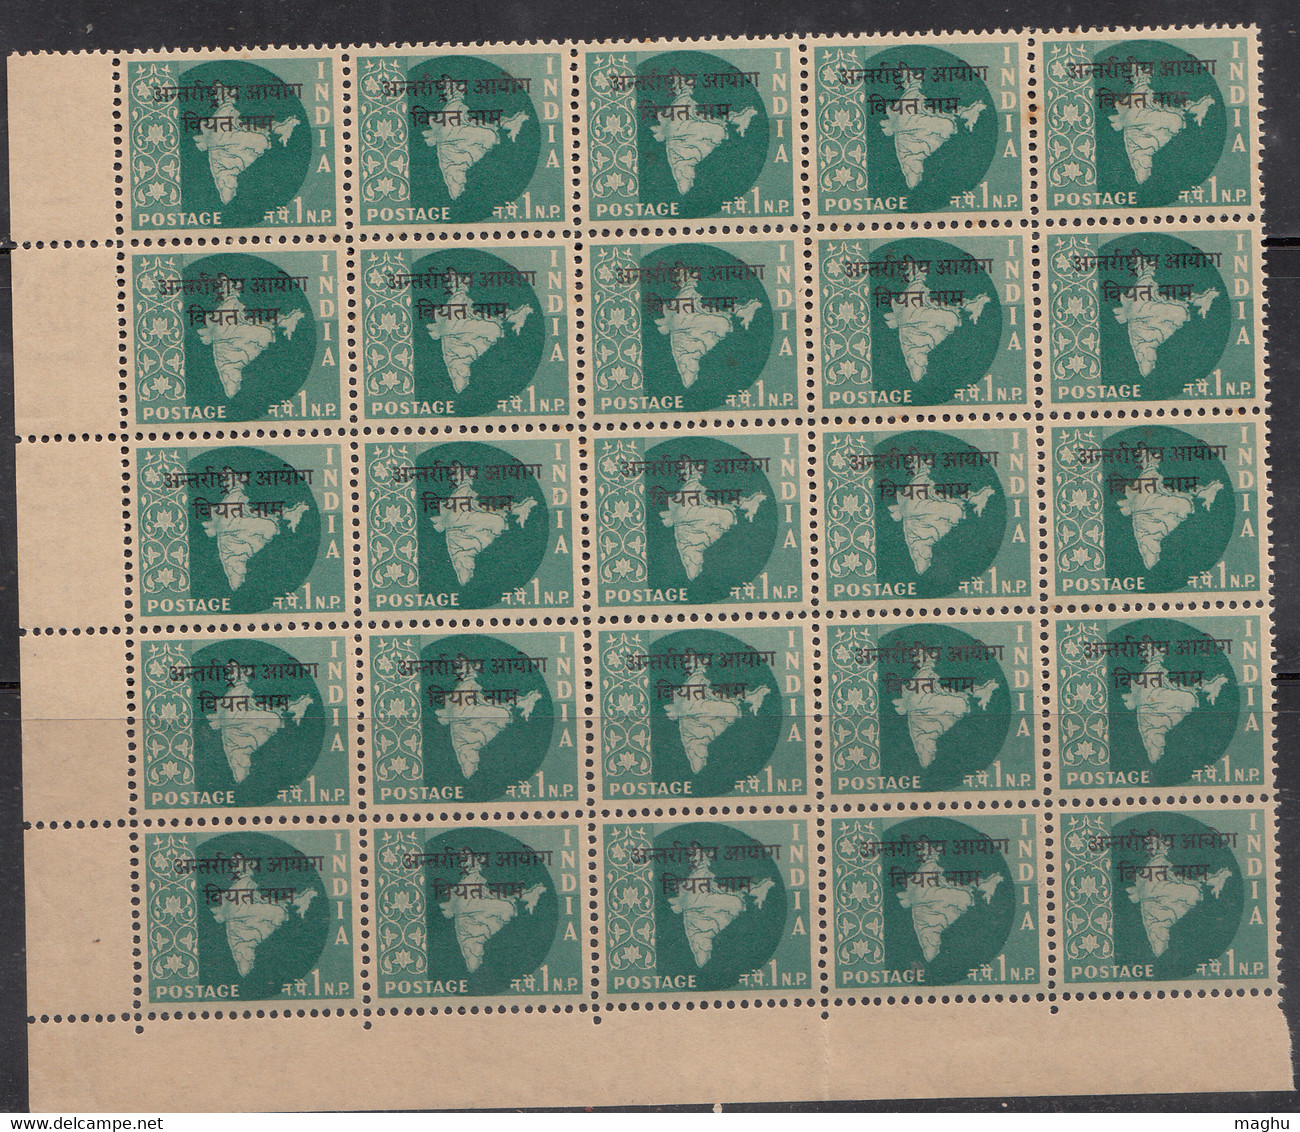 Ashokan Watermark Series, 1np Block Of 25 Vietnam Opt. On Map, India MNH 1962 - Military Service Stamp